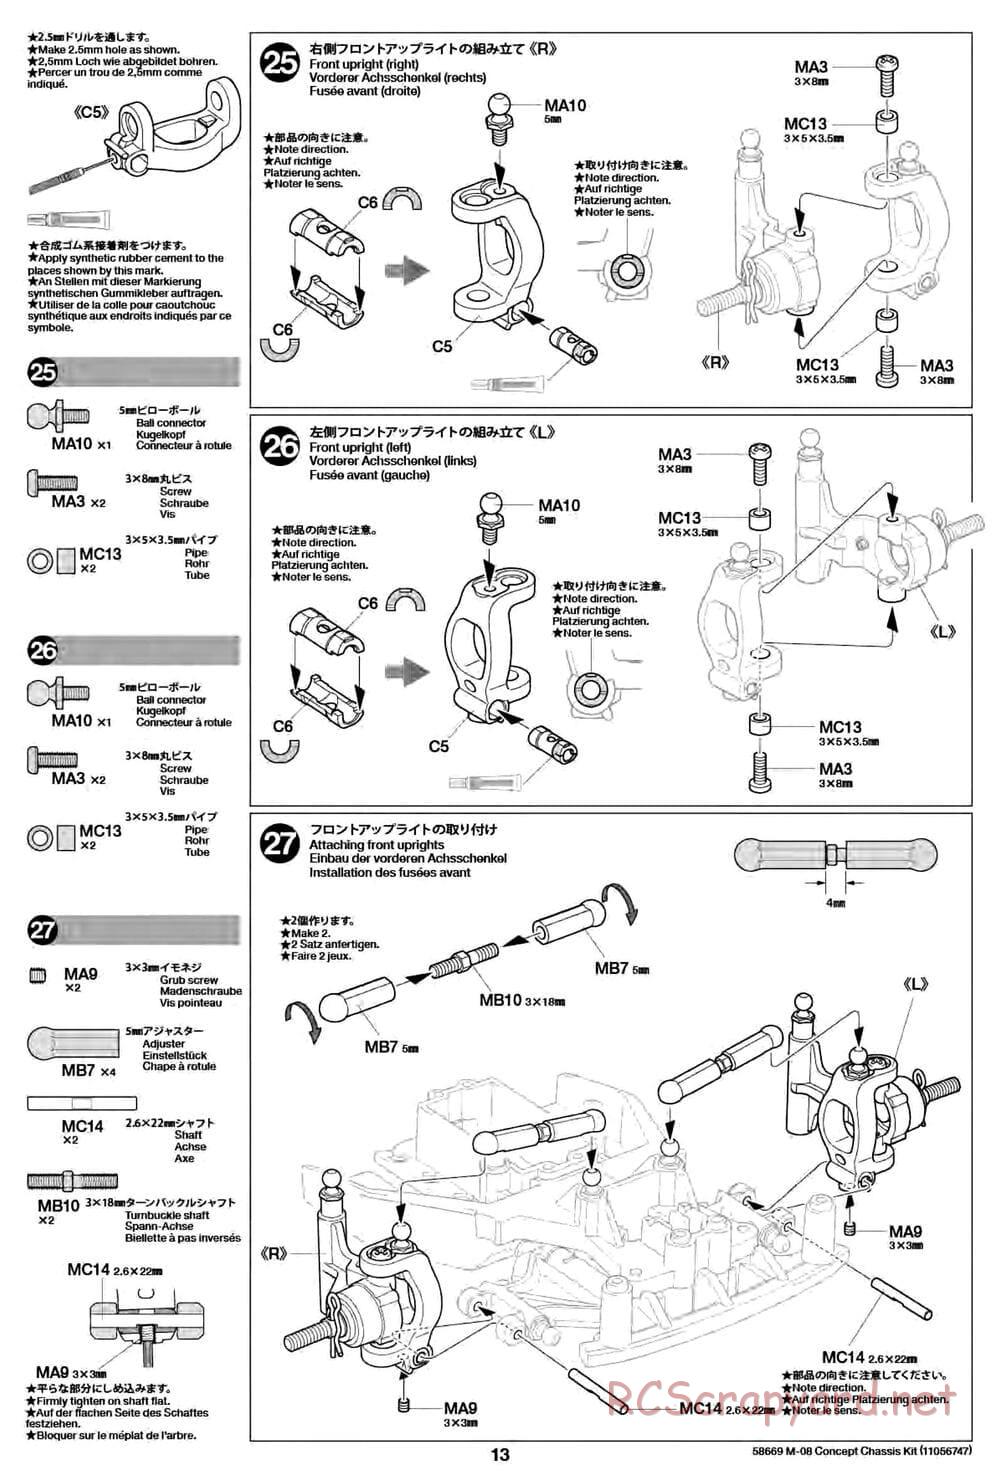 Tamiya - M-08 Concept Chassis - Manual - Page 13